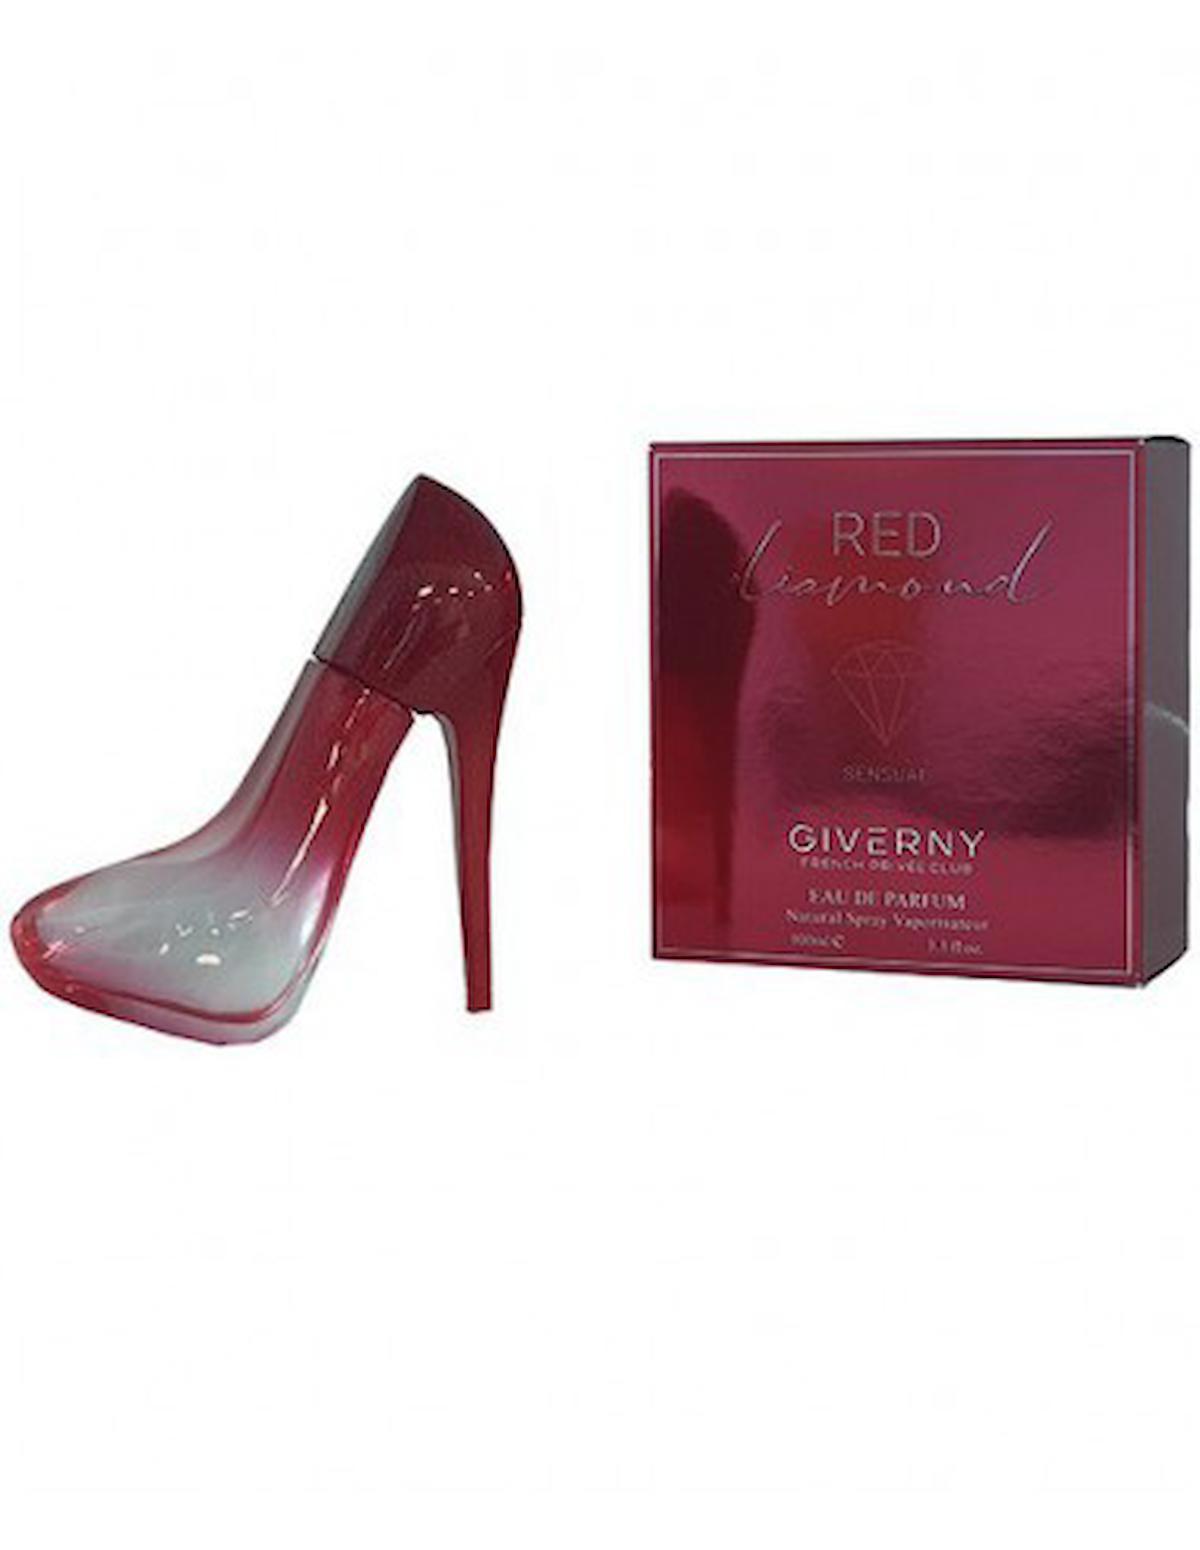 Red Blue Diamond Sensual Giverny French Privee Club EDT Kadın Parfüm 100 ml